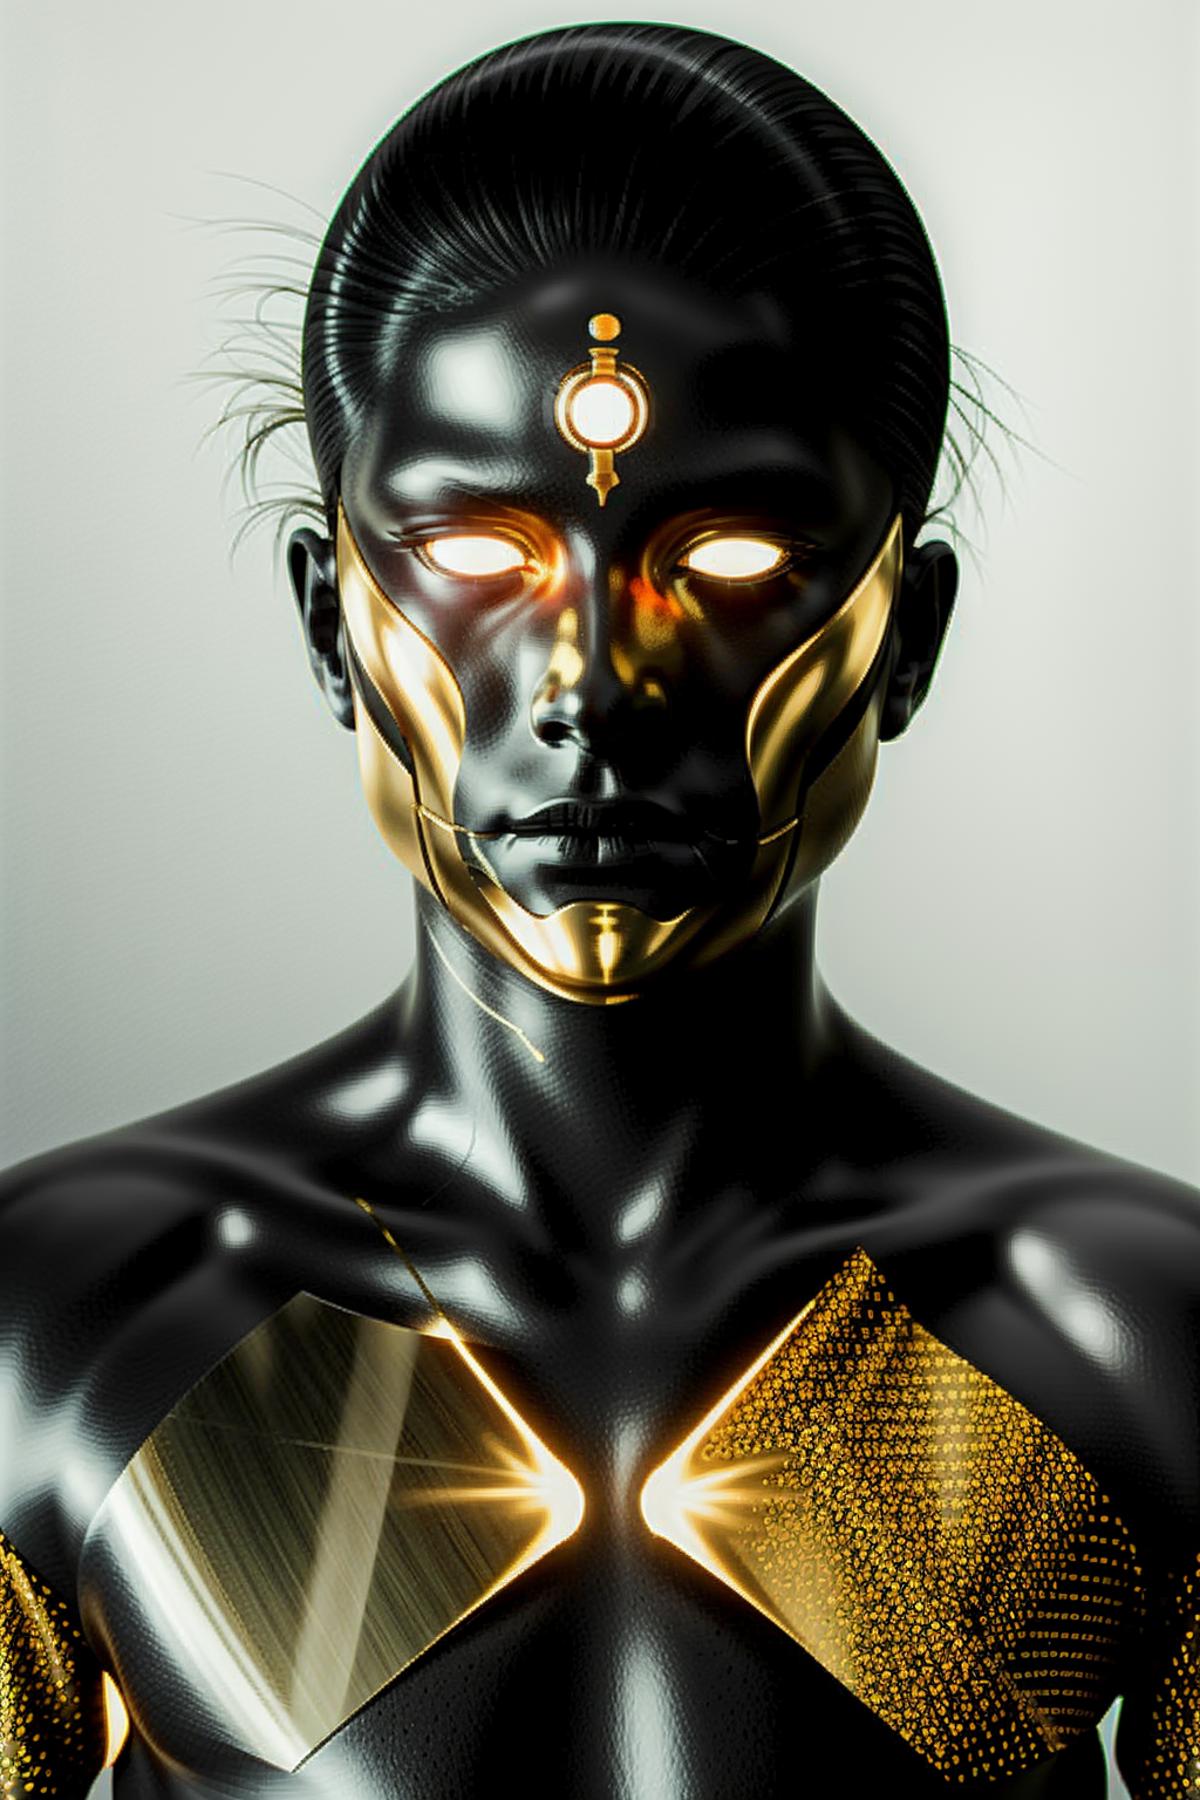 3D Cyber Portrait image by Ciro_Negrogni